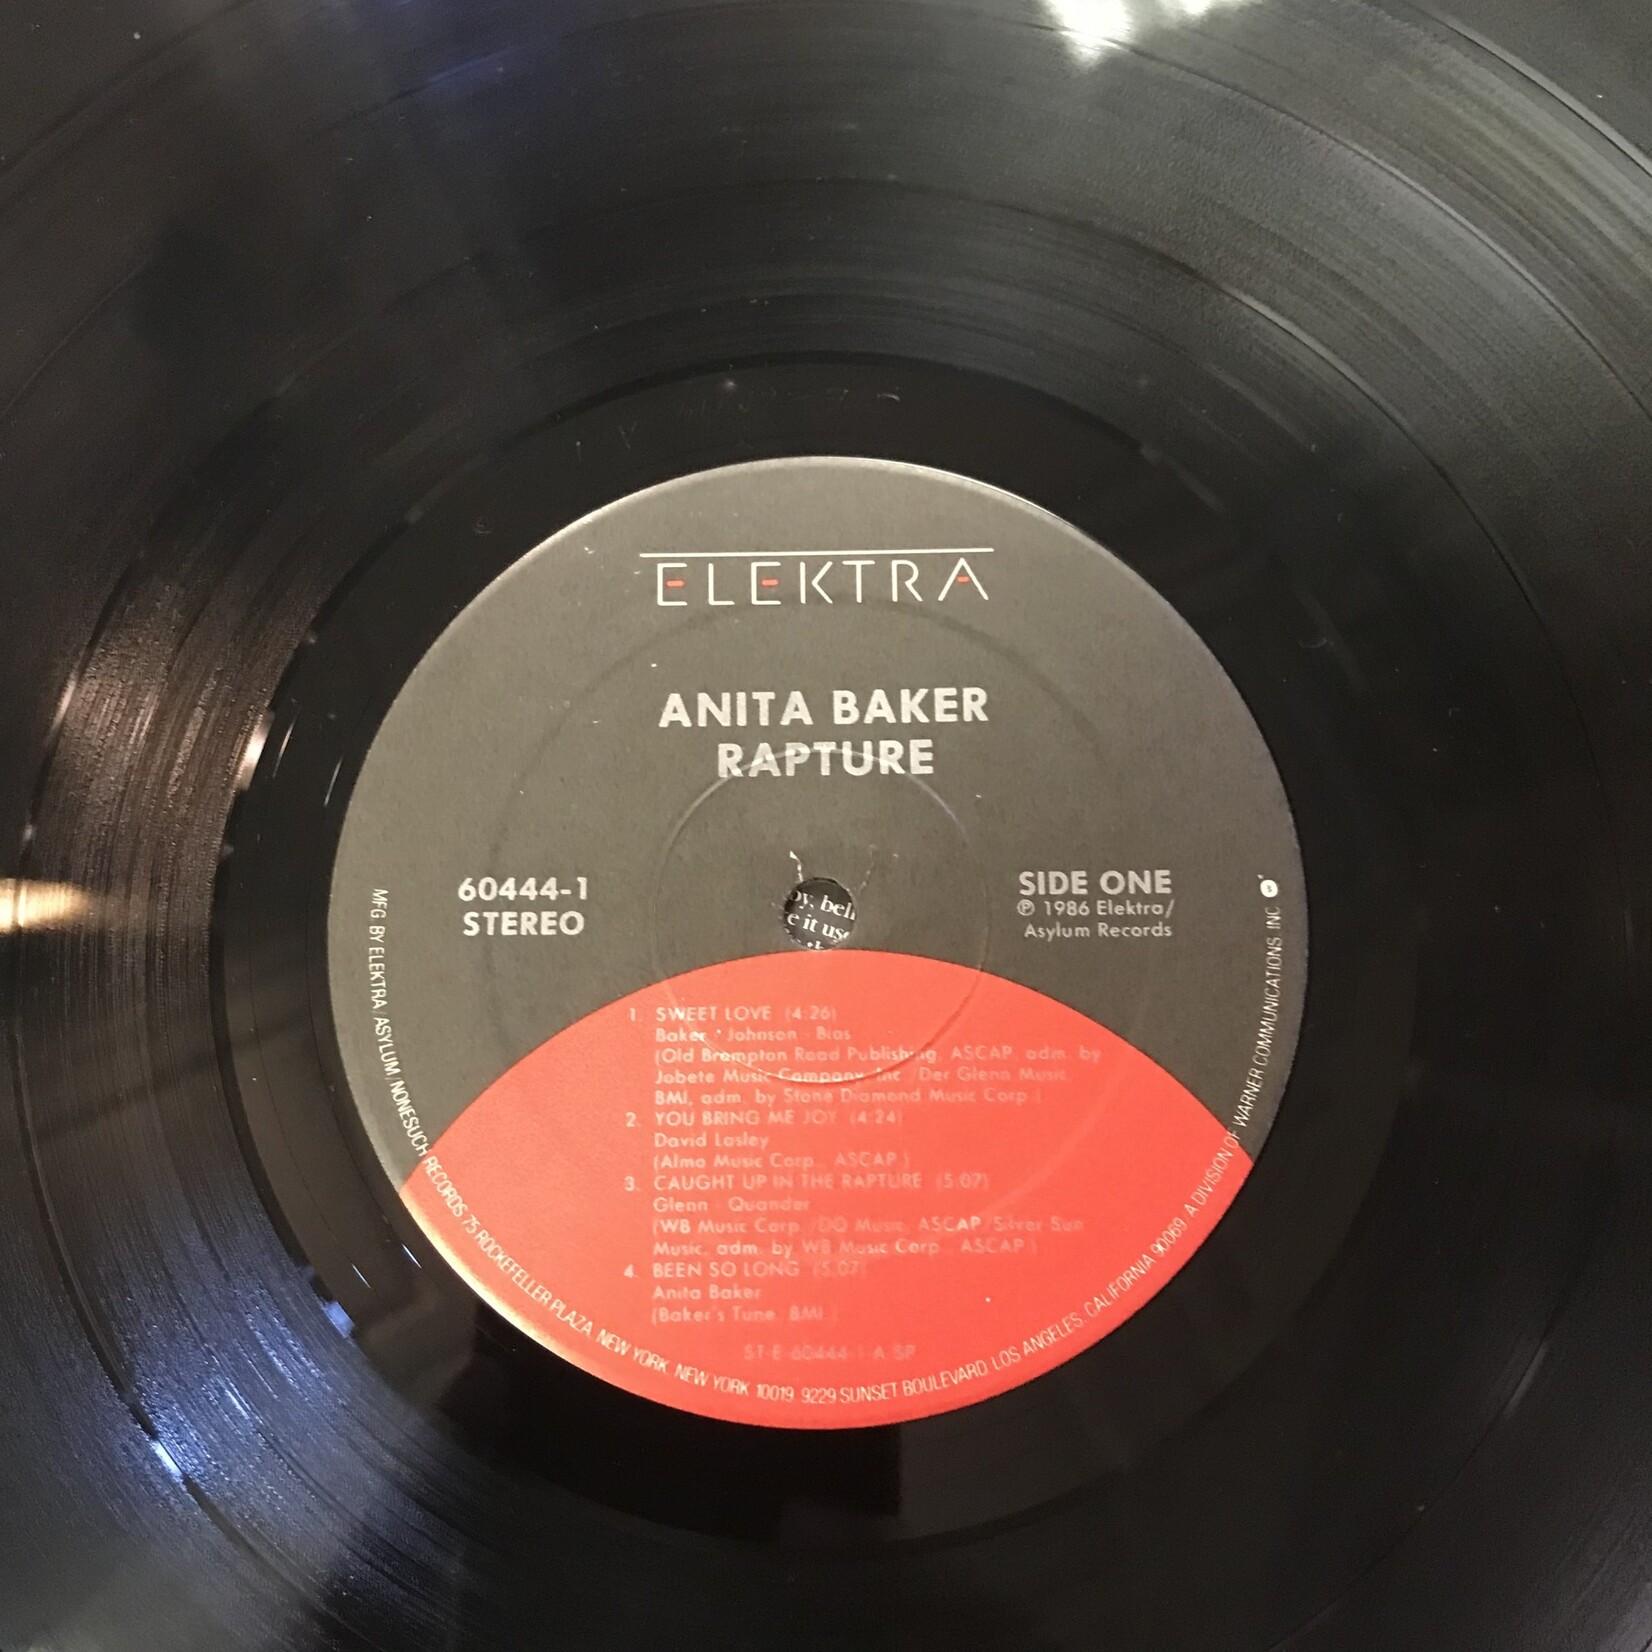 Anita Baker - Rapture - 60444-1 - Vinyl LP w/ Hype Sticker (USED)